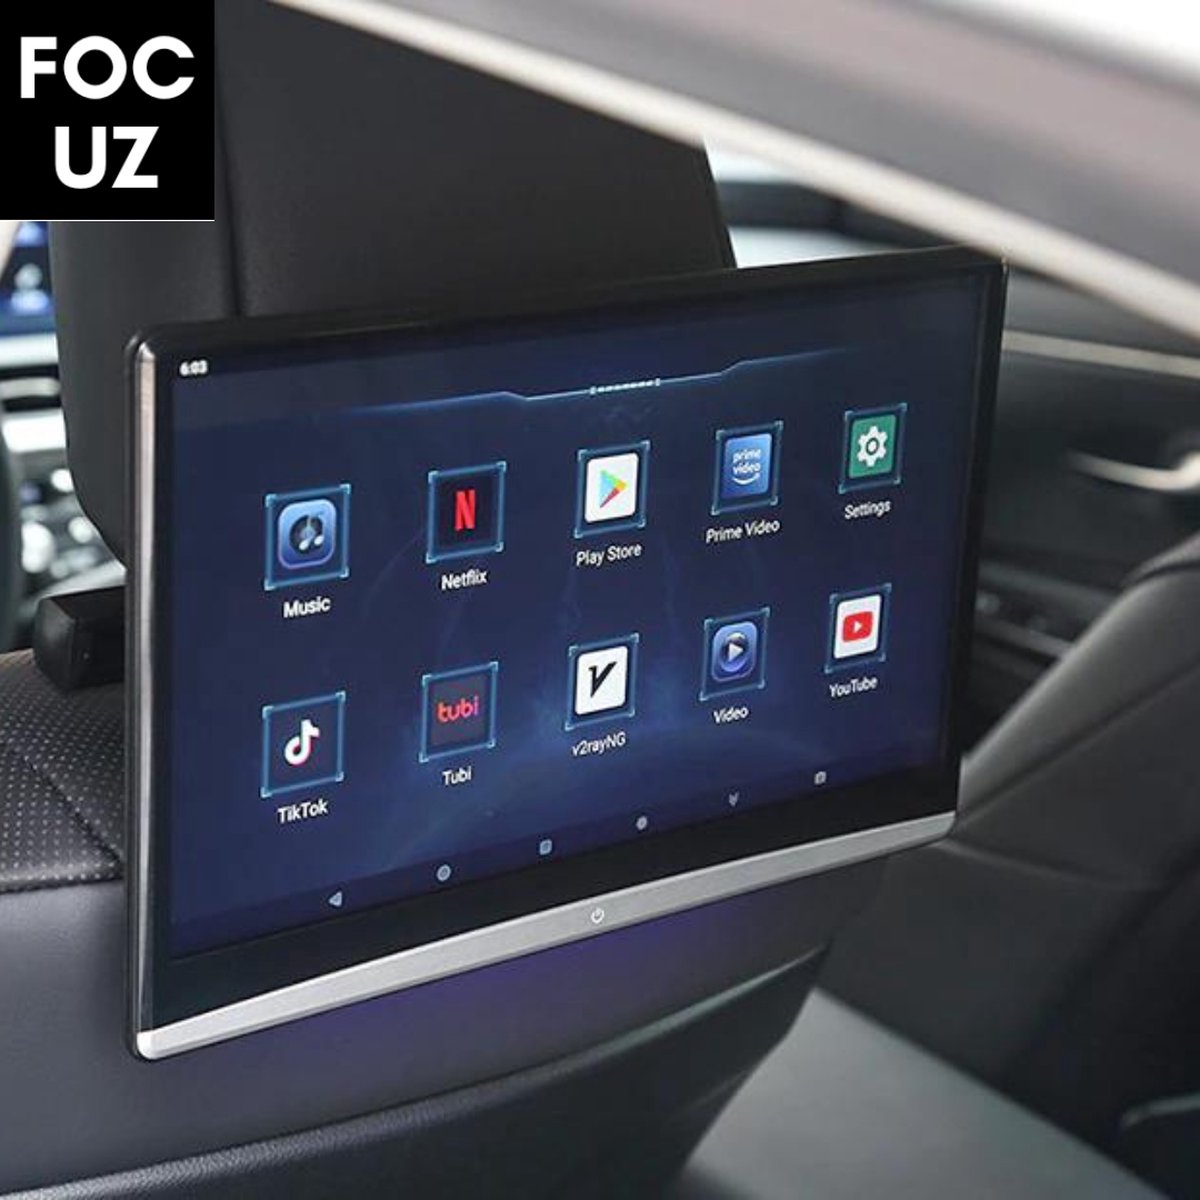 Focuz© Autoscherm - Auto schermen kinderen - Monitor - Tablet - Hoofdsteun - Multimedia - 11.3 inch - Wifi/Bluetooth - 4K - Android 10.0